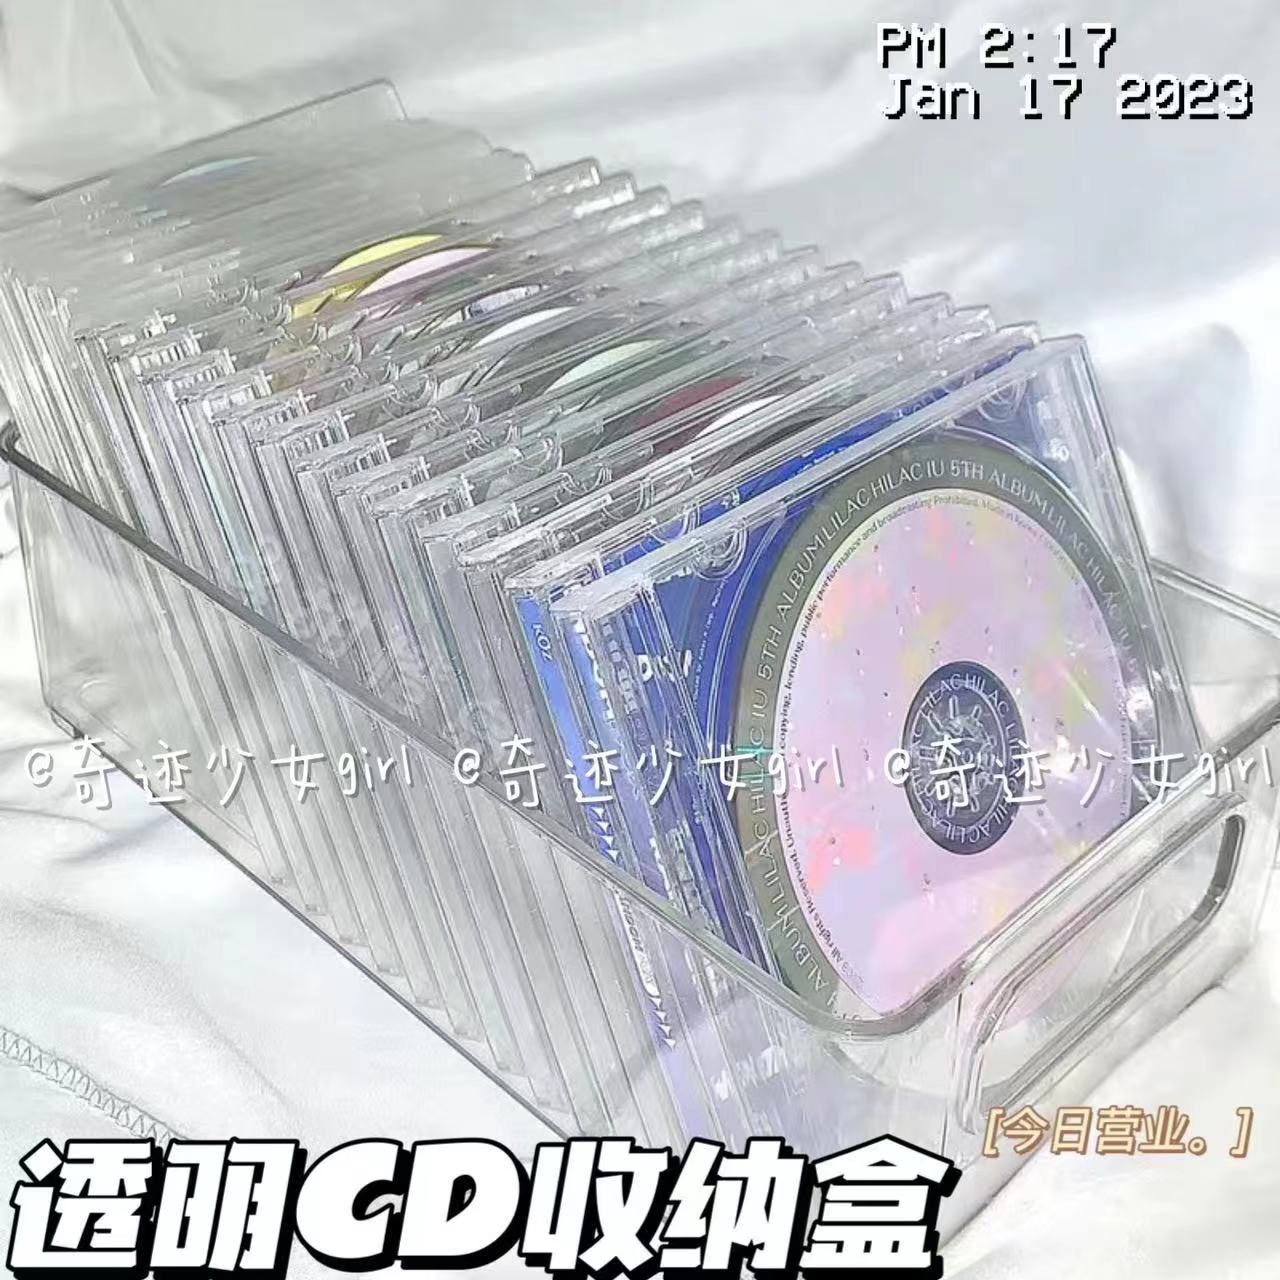 CD ボックス収納ボックスディスプレイラックアクリルディスクボックス収納バスケットアルバム CD 収納ボックスデスクトップイン